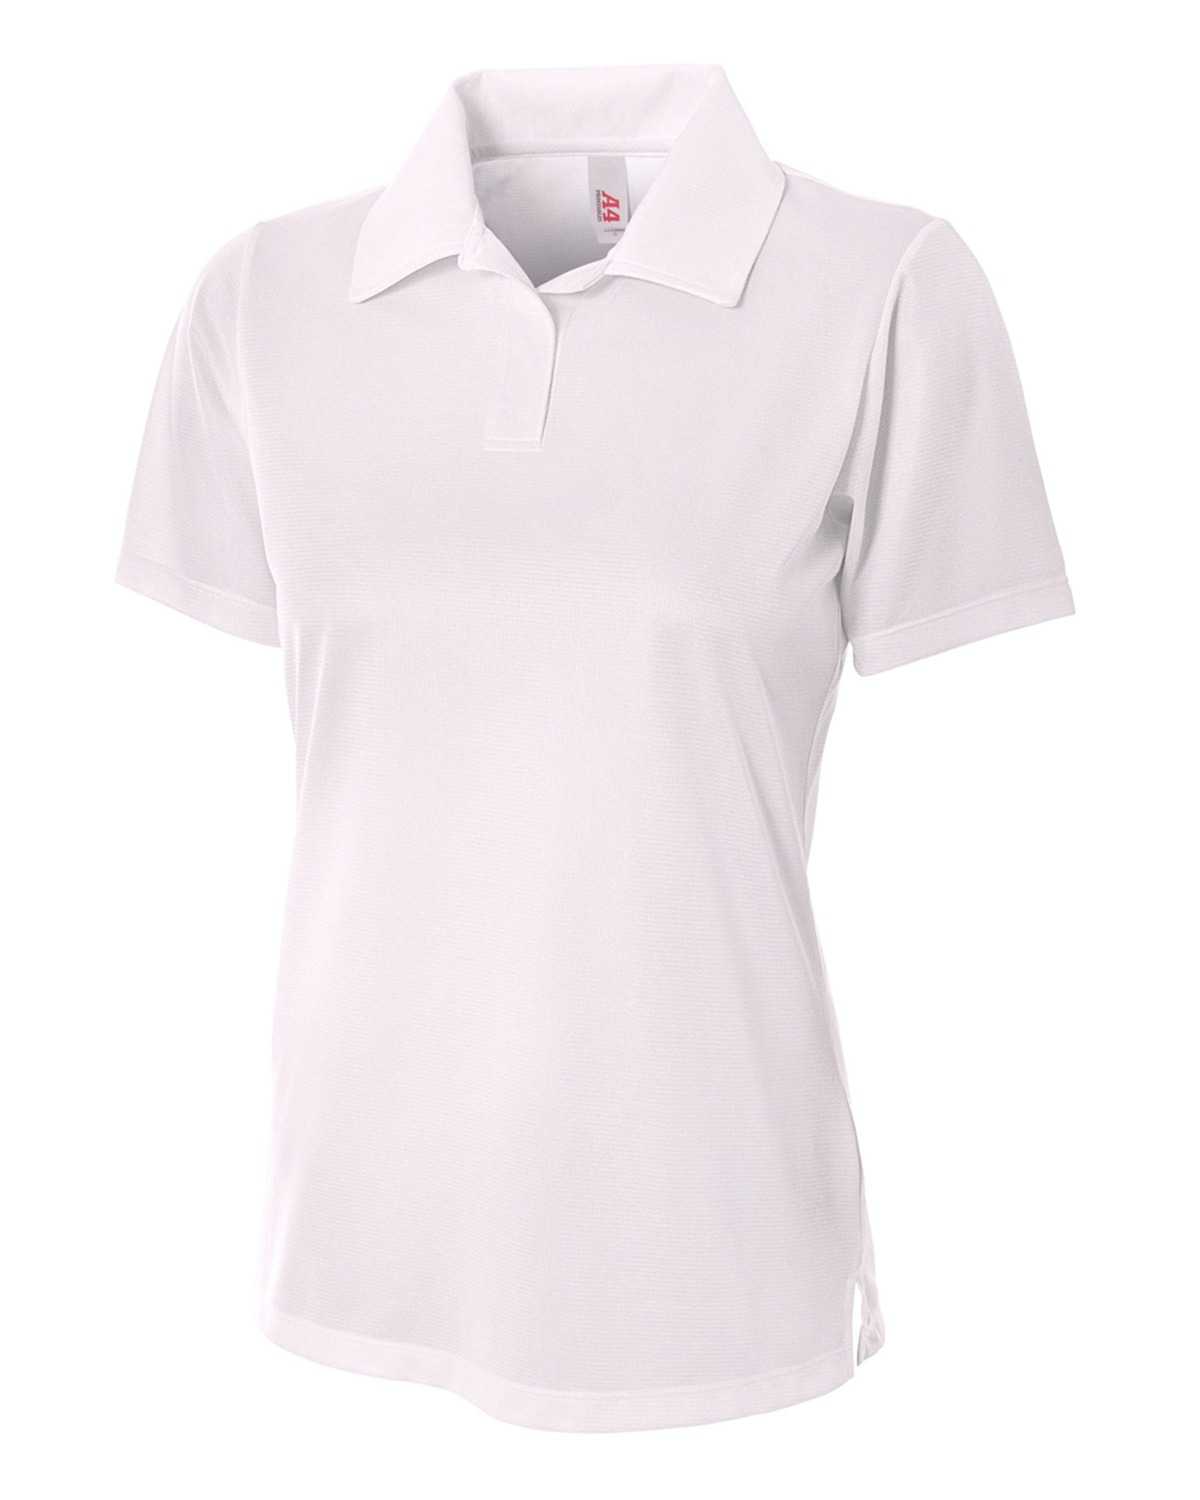 A4 NW3265 Ladies' Textured Polo Shirt w/ Johnny Collar | ApparelChoice.com